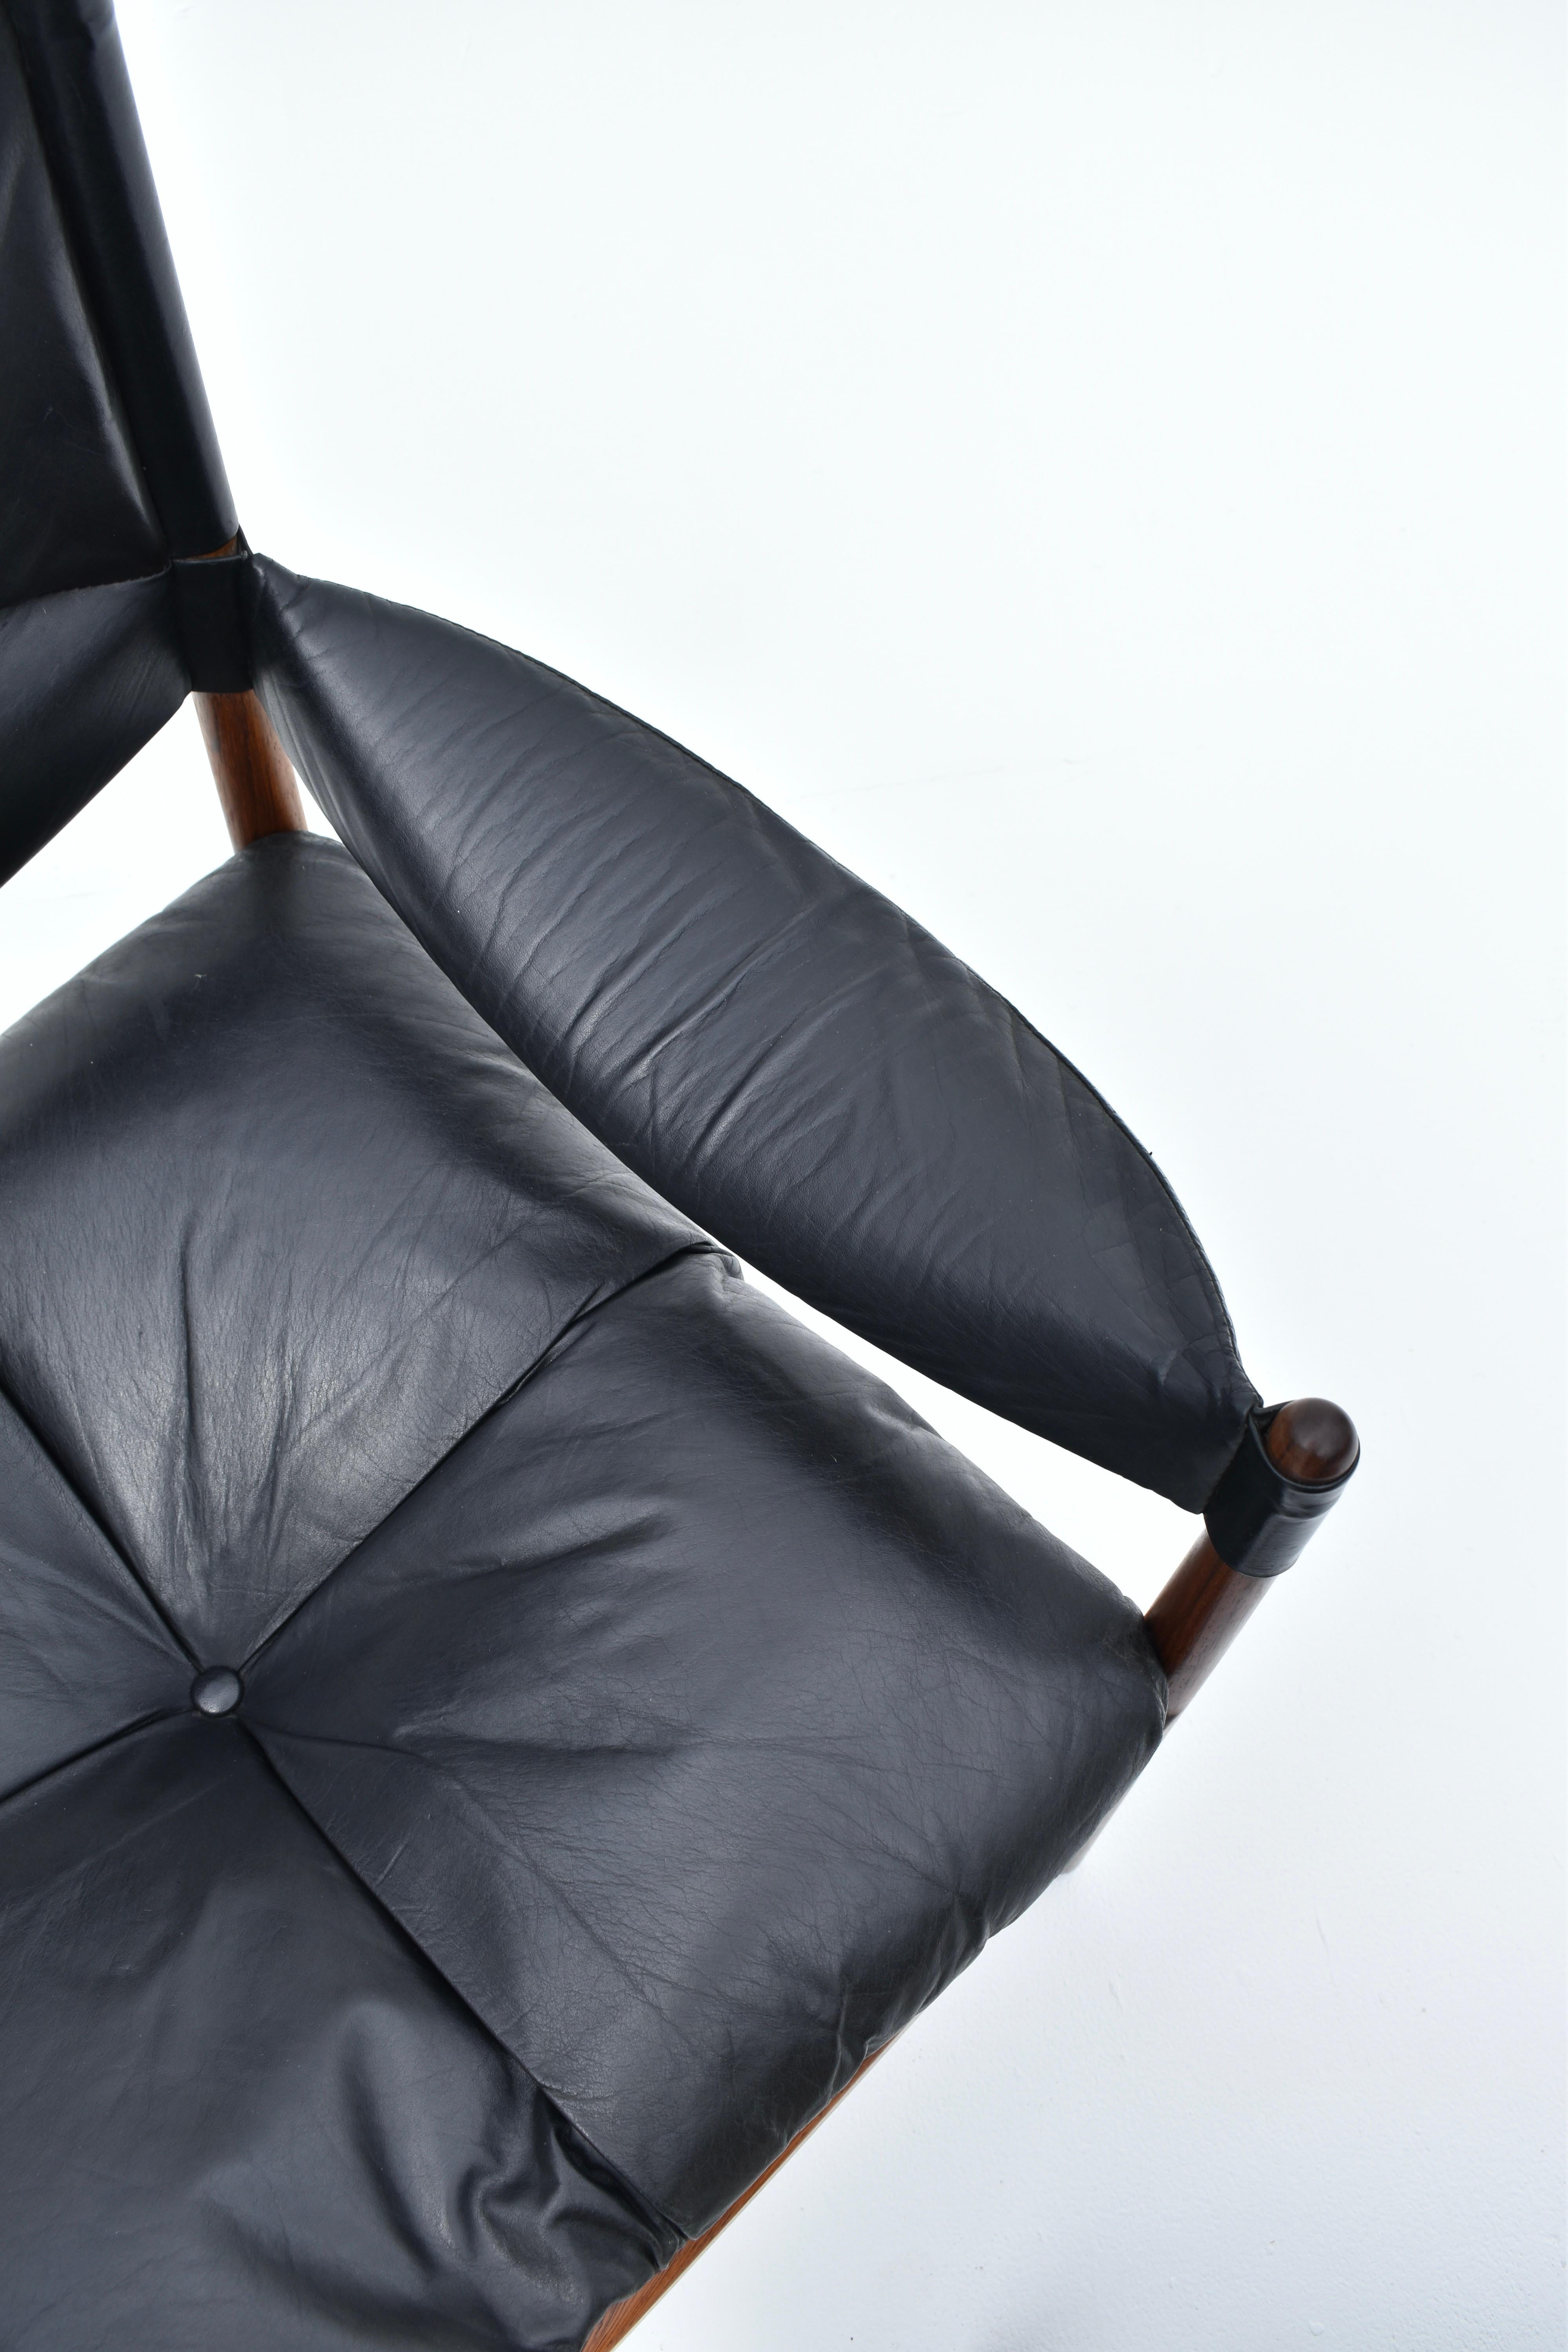 Kristian Vedel Rosewood & Leather 'Modus' Chair & Footstool For Soren Willadsen 7